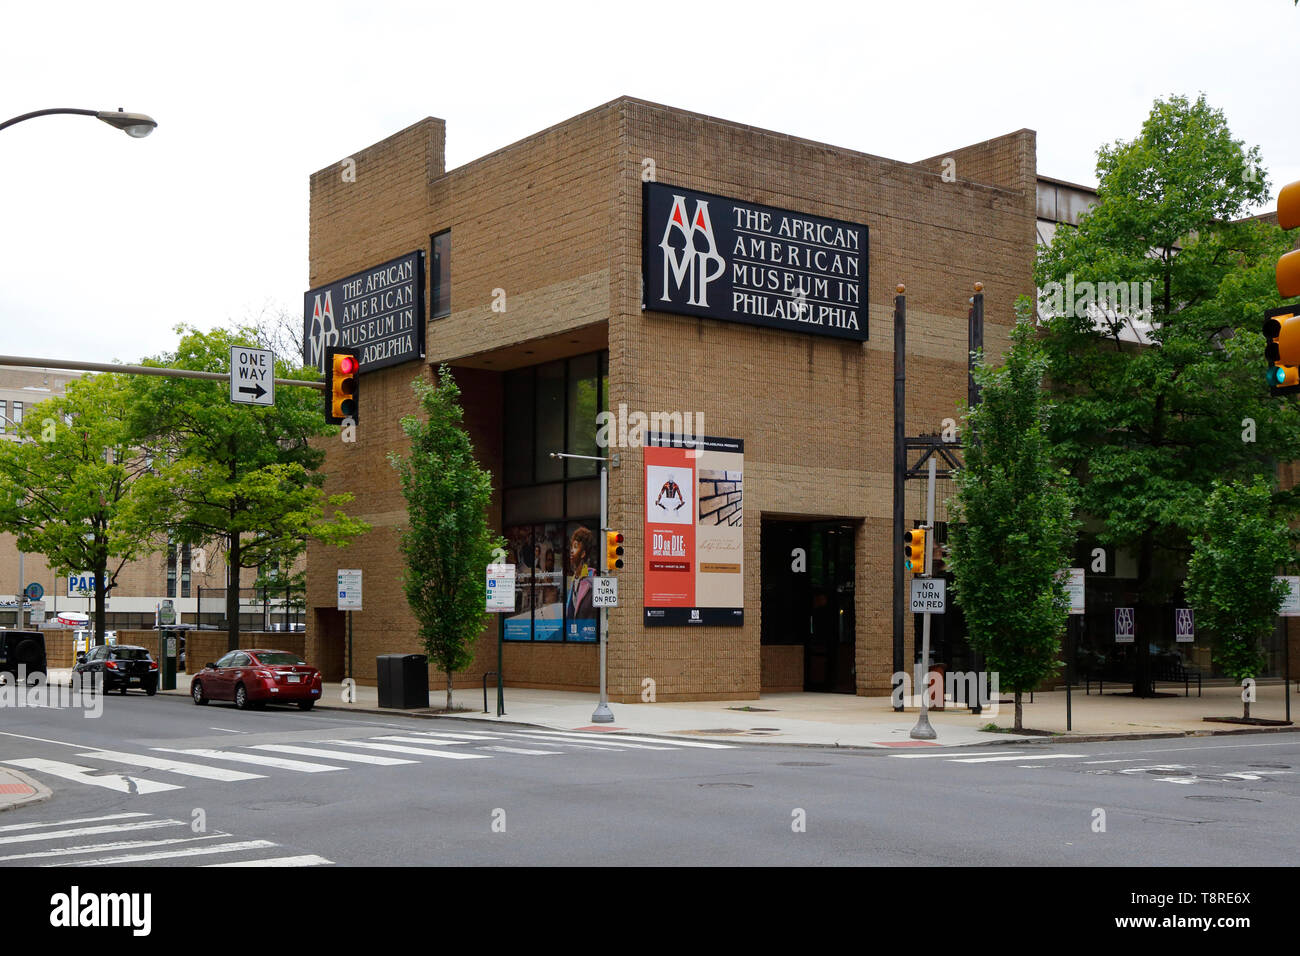 African American Museum in Philadelphia, 701 Arch St, Philadelphia, PA Stock Photo